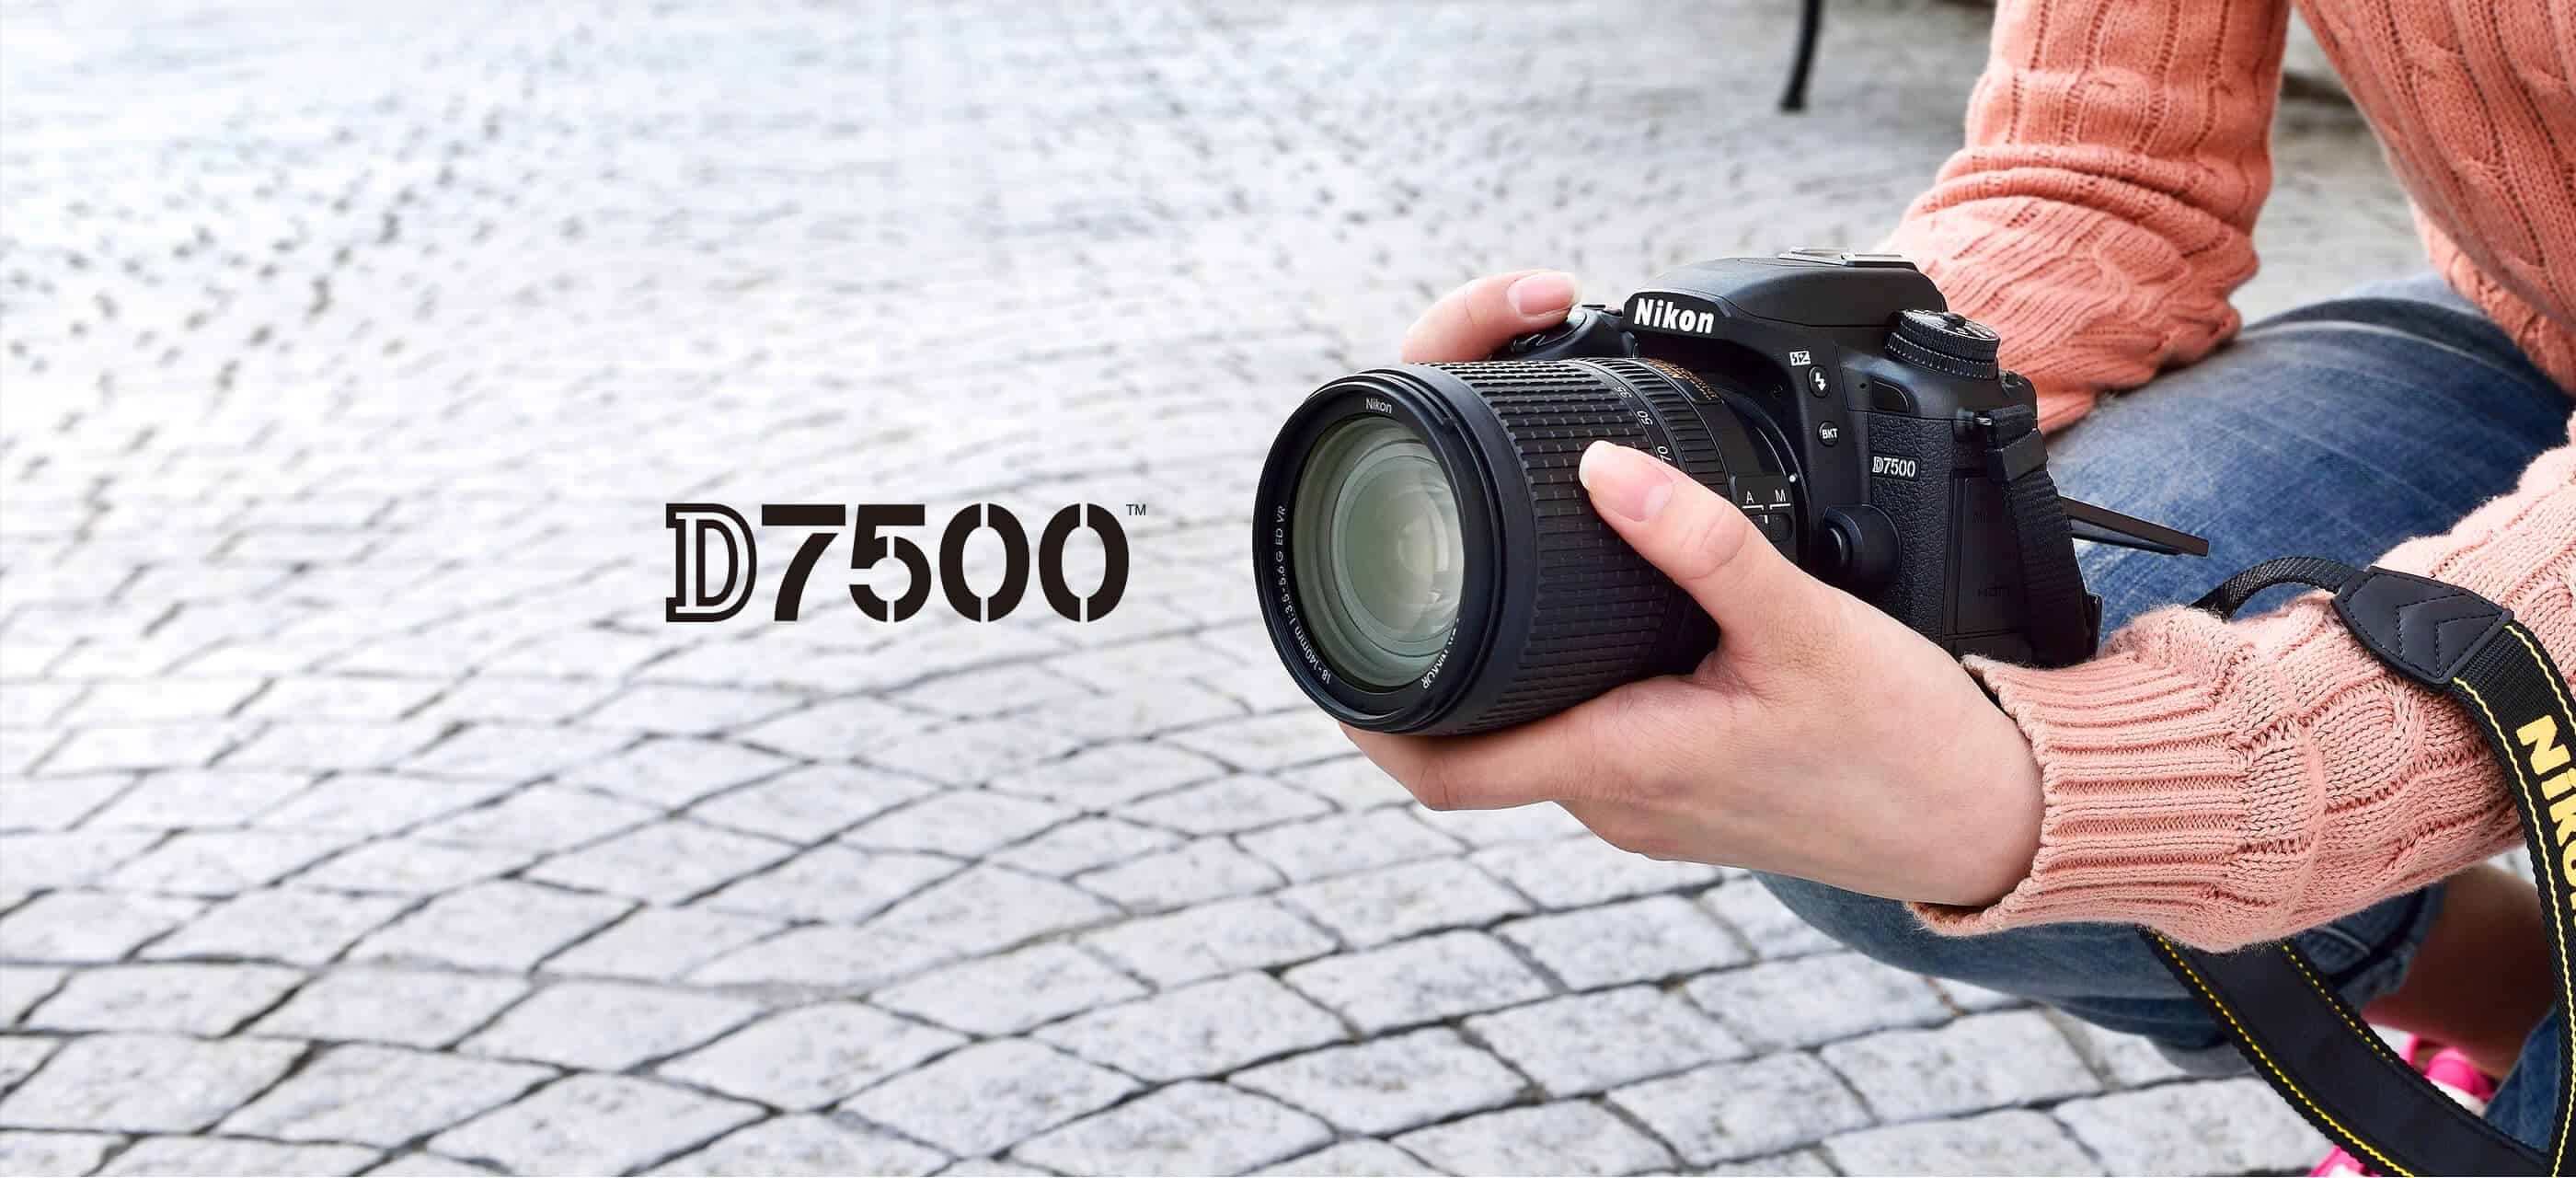 D7500 black Nikon camera